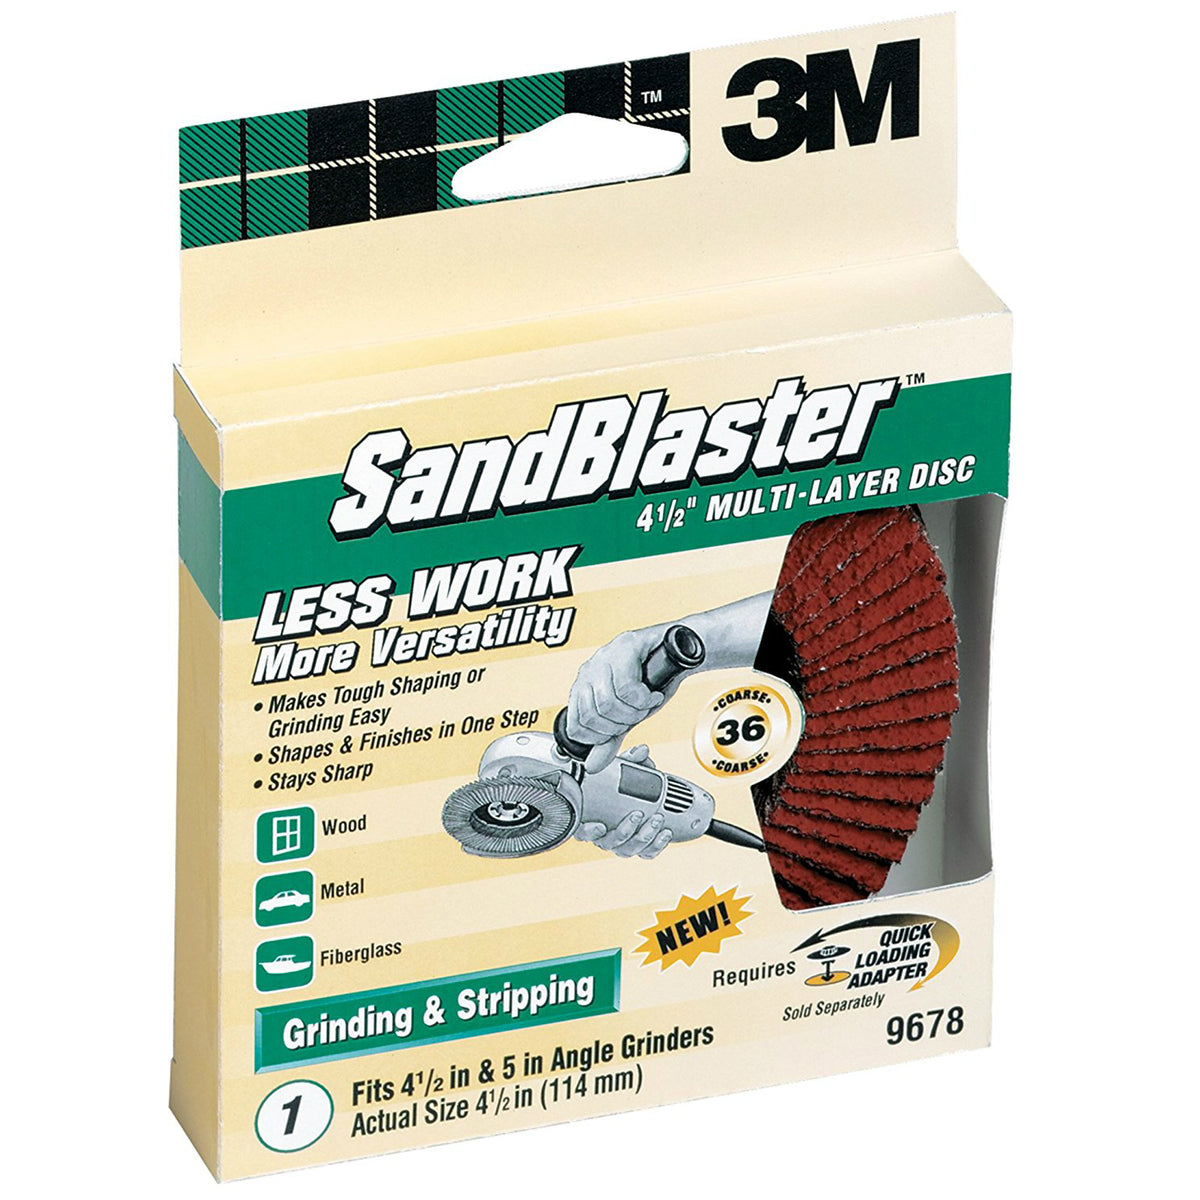 3M 9678 SandBlaster Right Angle Grinder Multi-Layer Sanding Disc, 4.5", 36 Grit